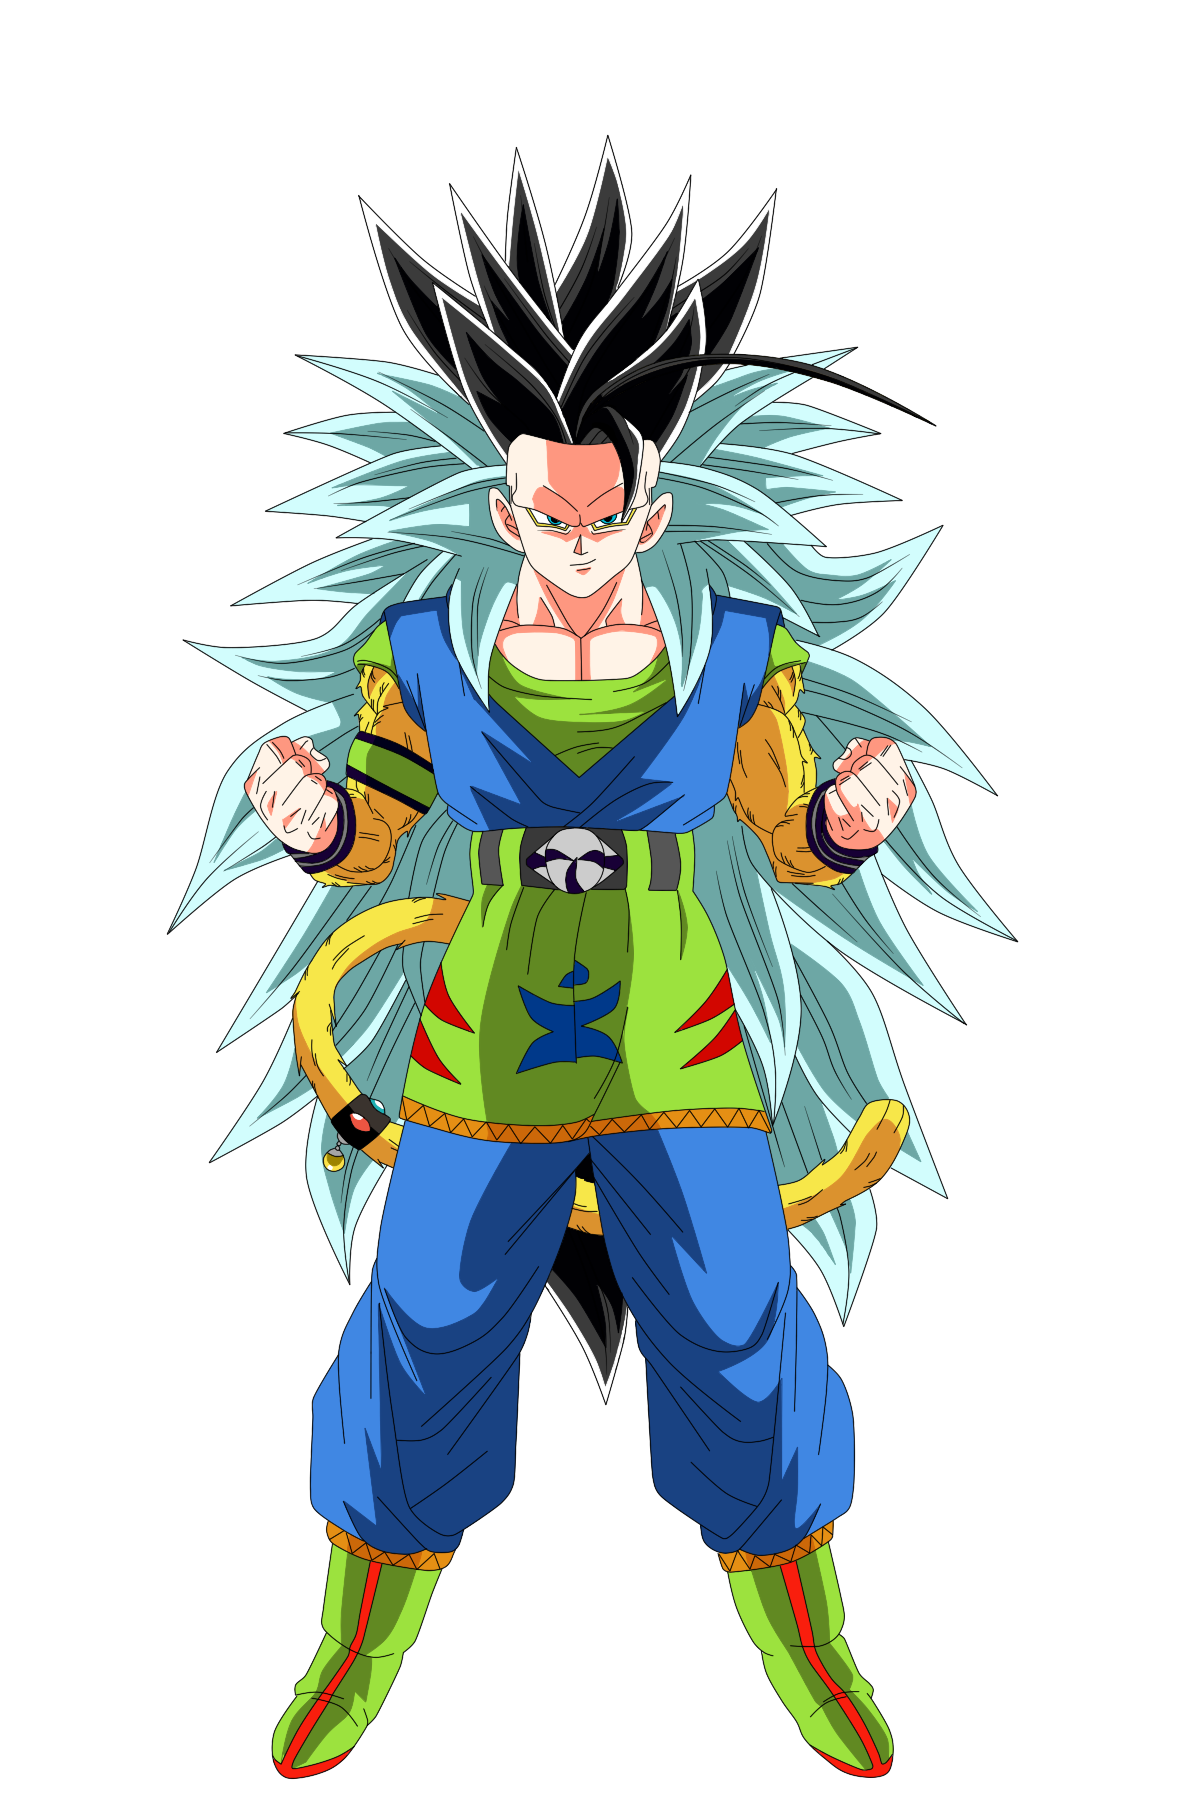 Goku Super Saiyajin 8 V3 by gonzalossj3 on DeviantArt